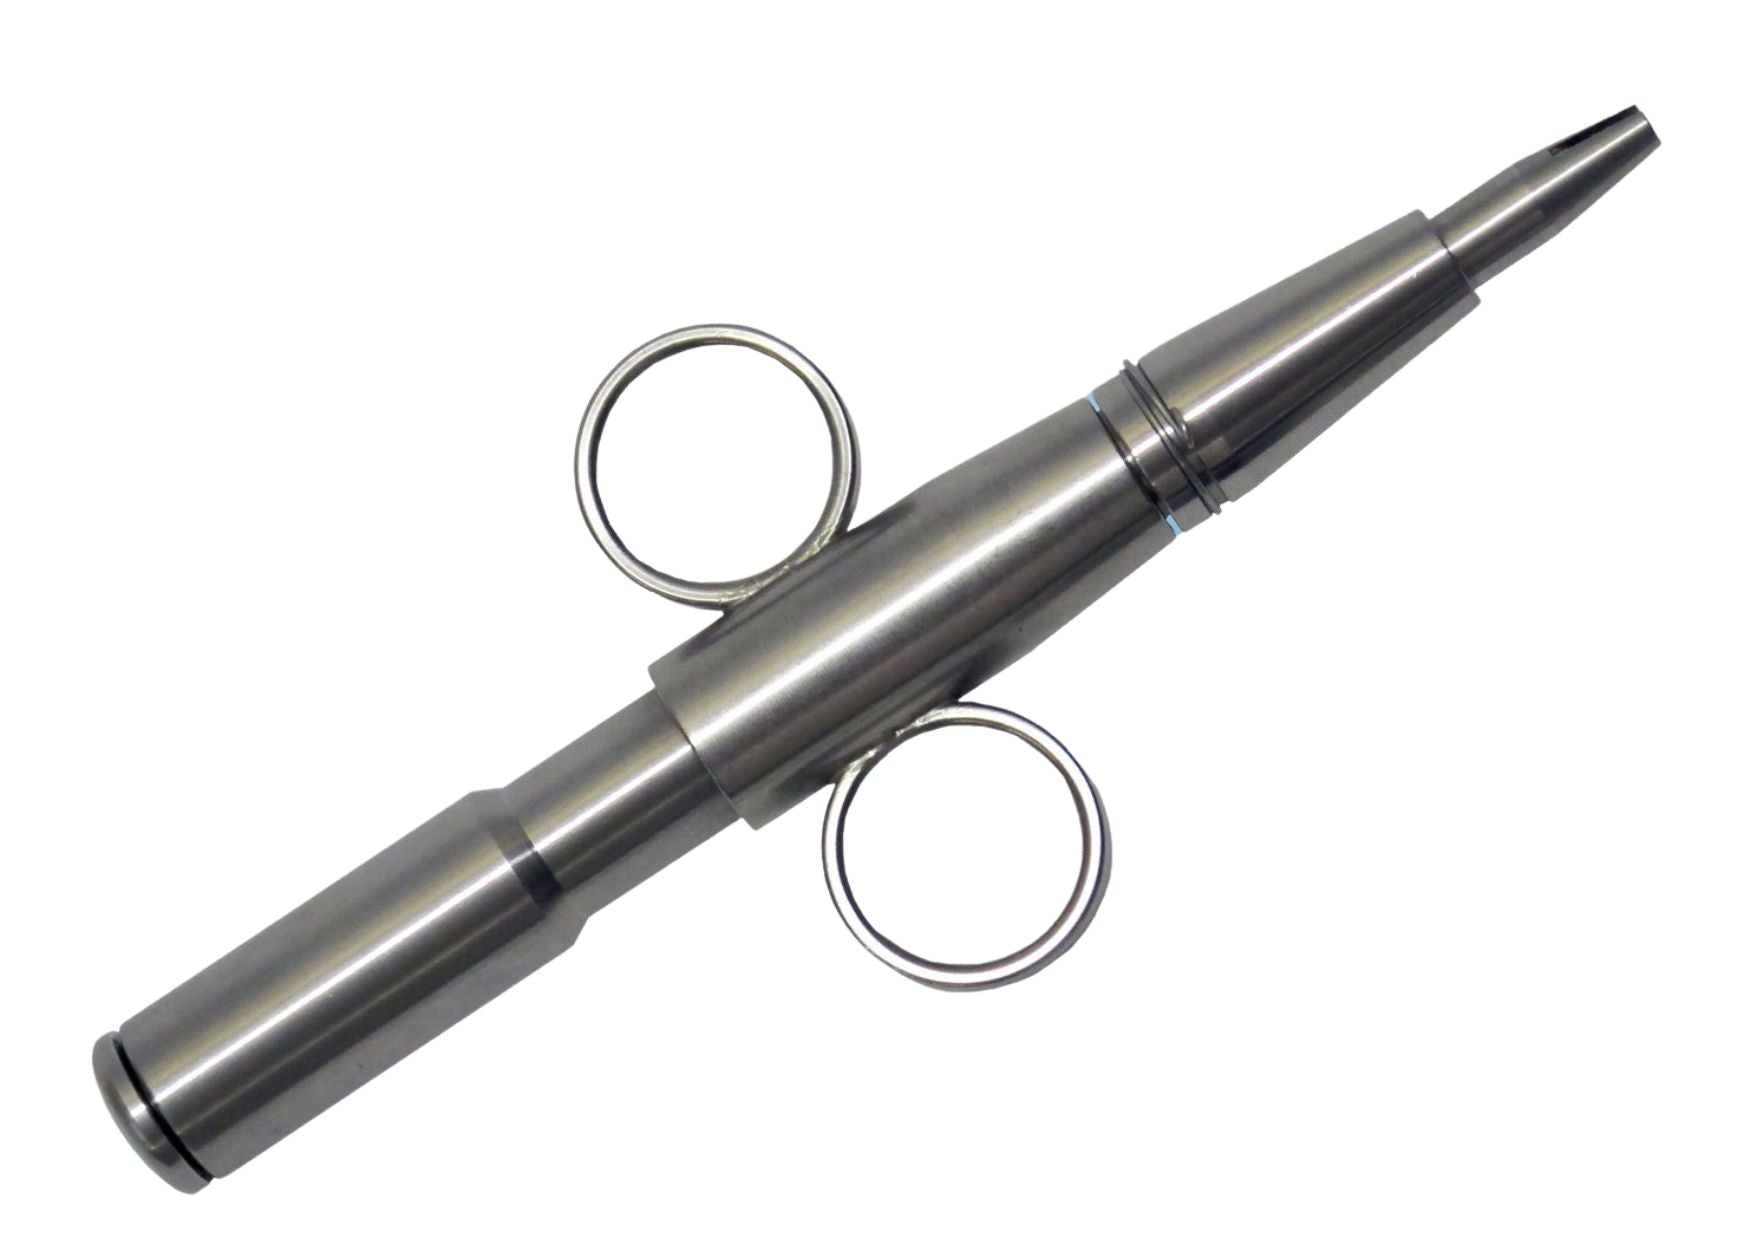 LAVABIS needle injector set, 3-piece - 0